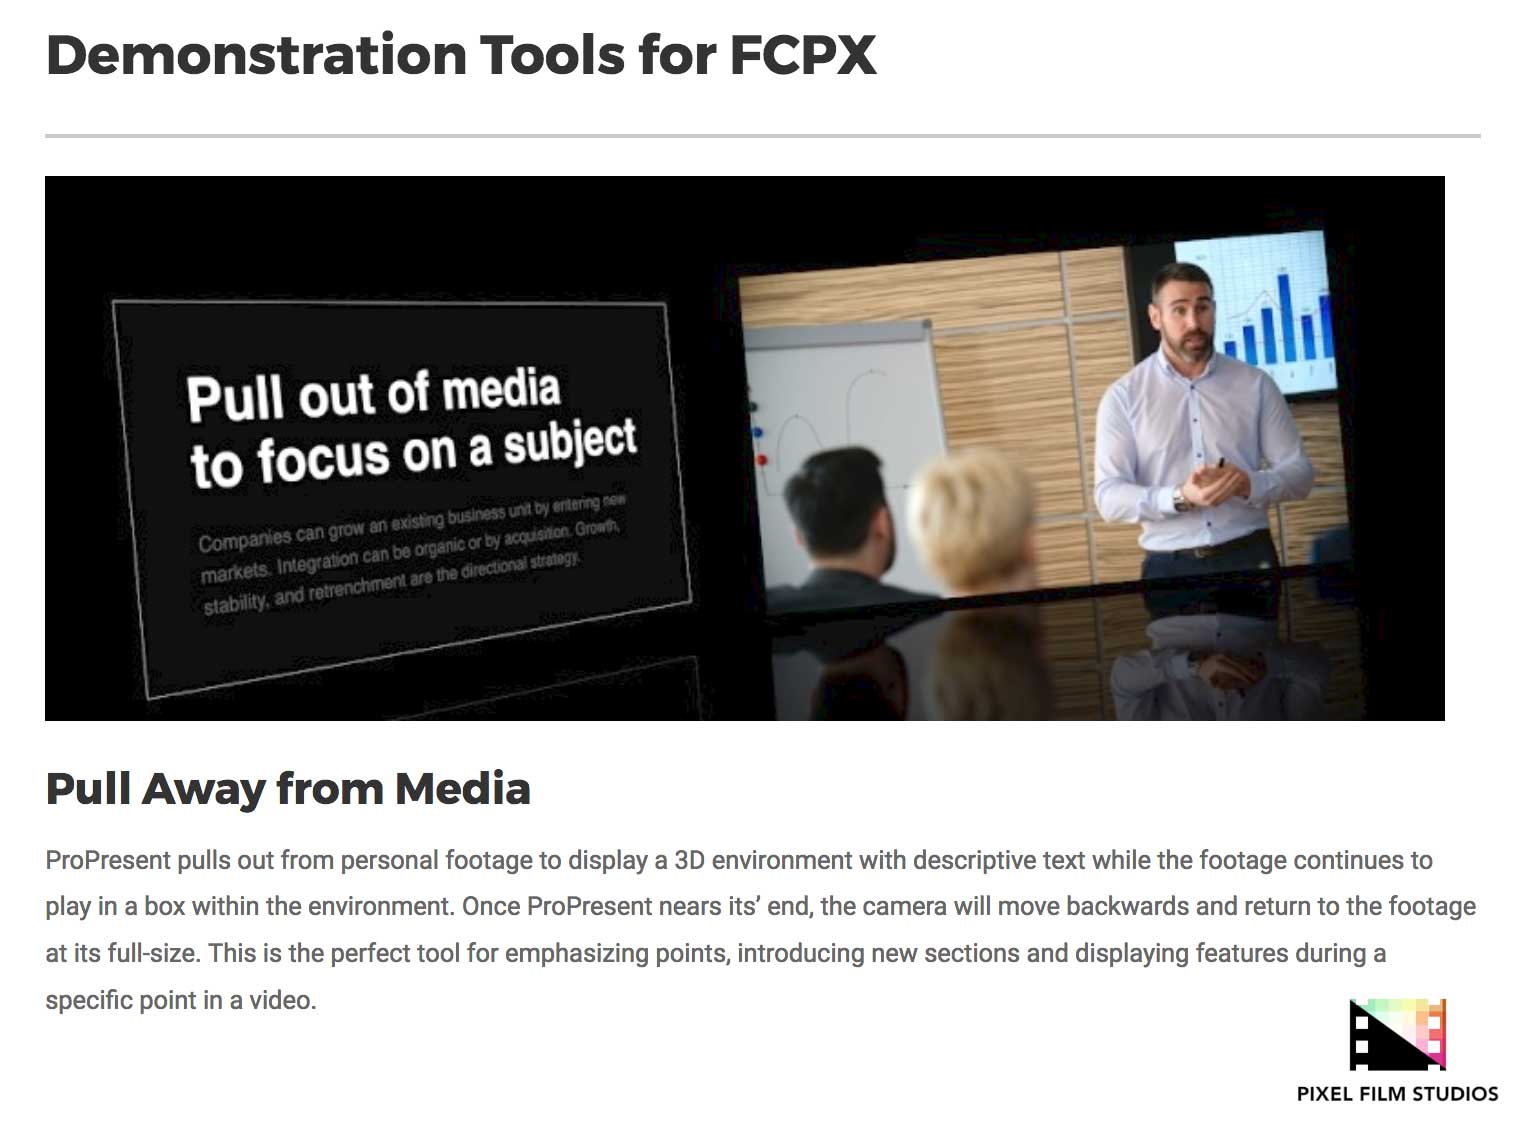 ProPresent - FCPX Effects - Pixel FIlm Studios